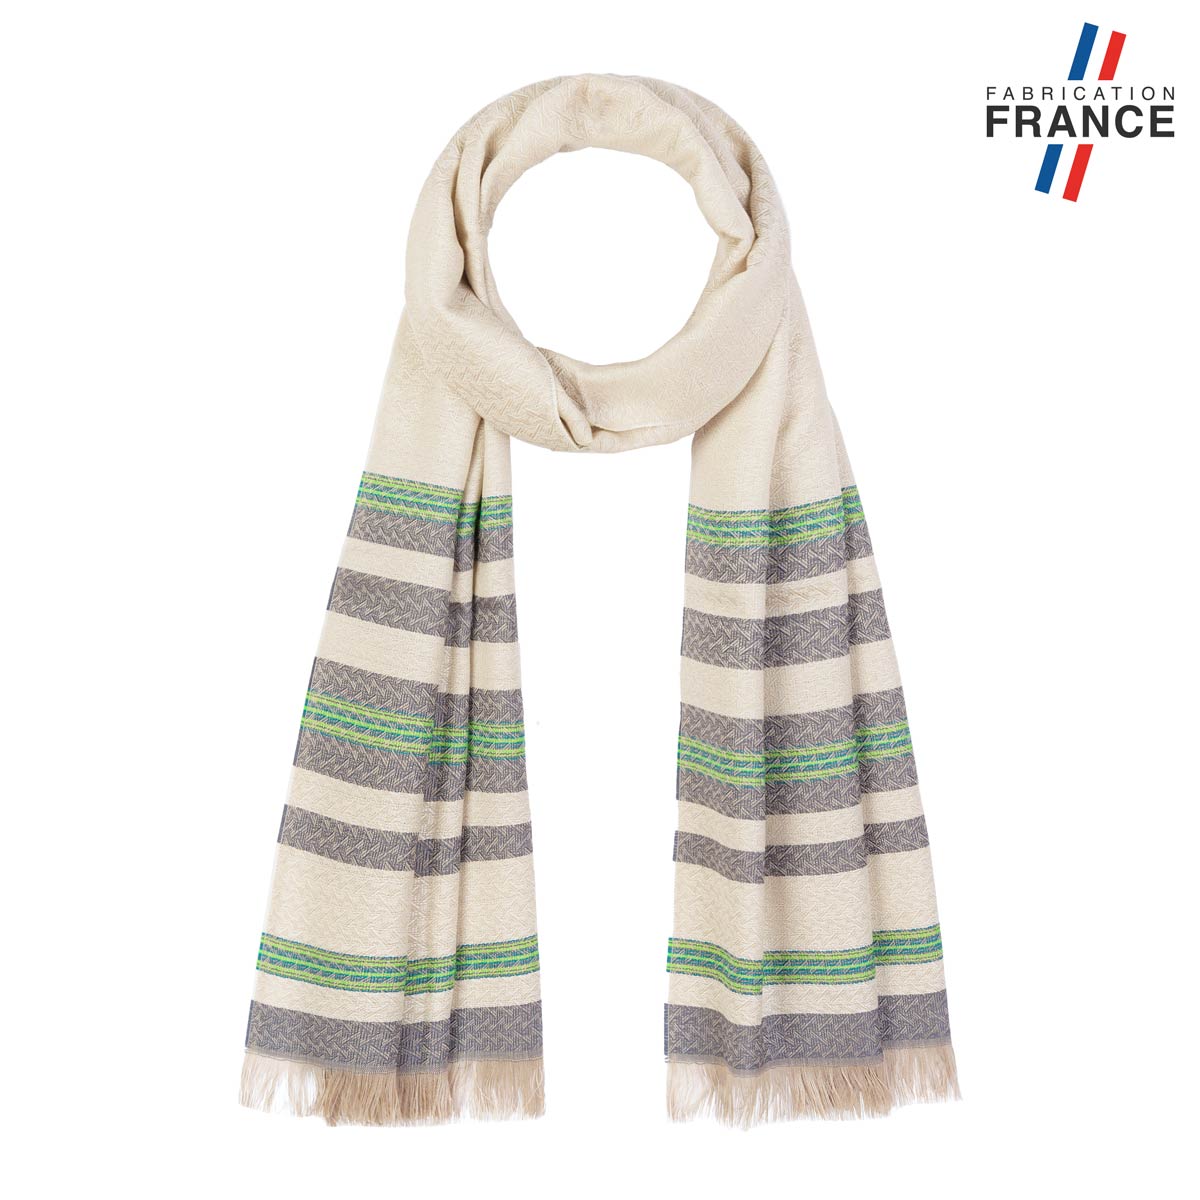 Echarpe-mi-saison-rayures-blanc-vert-gris-fabriquee-en-France--AT-06911_F12-1FR